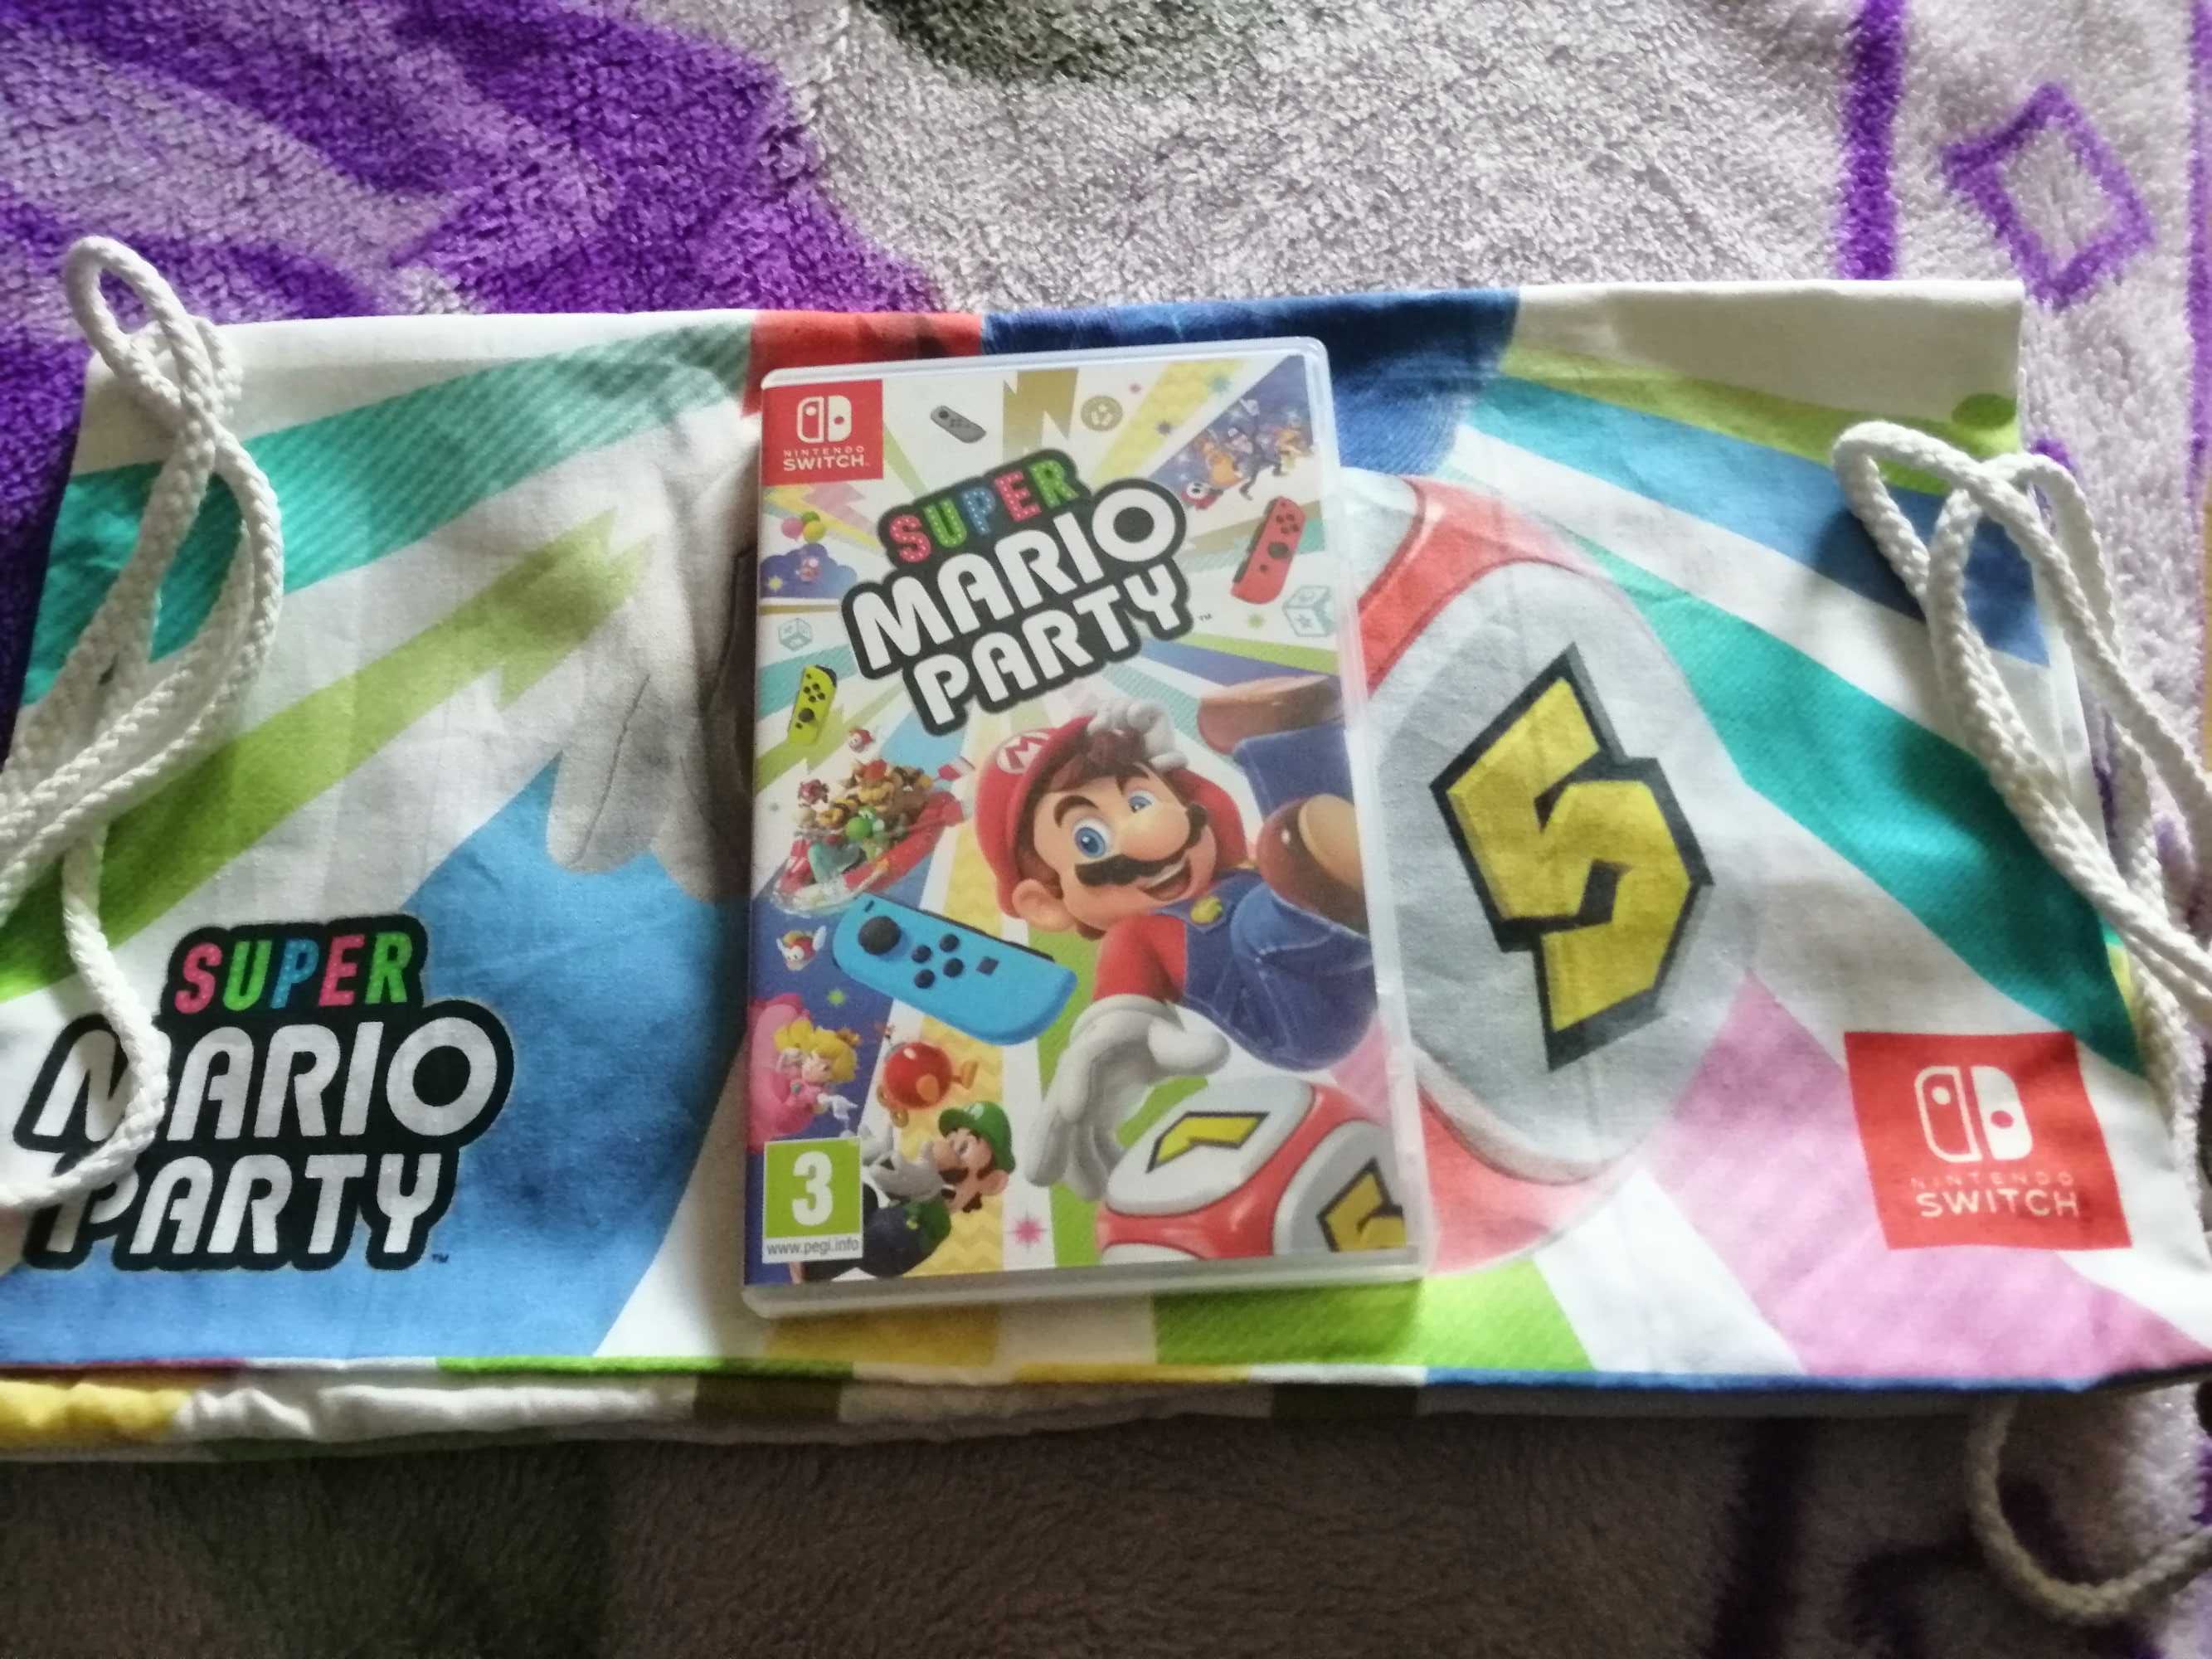 Super Mario Party (joc Nintendo Switch) + rucsac + abtibilduri Mario